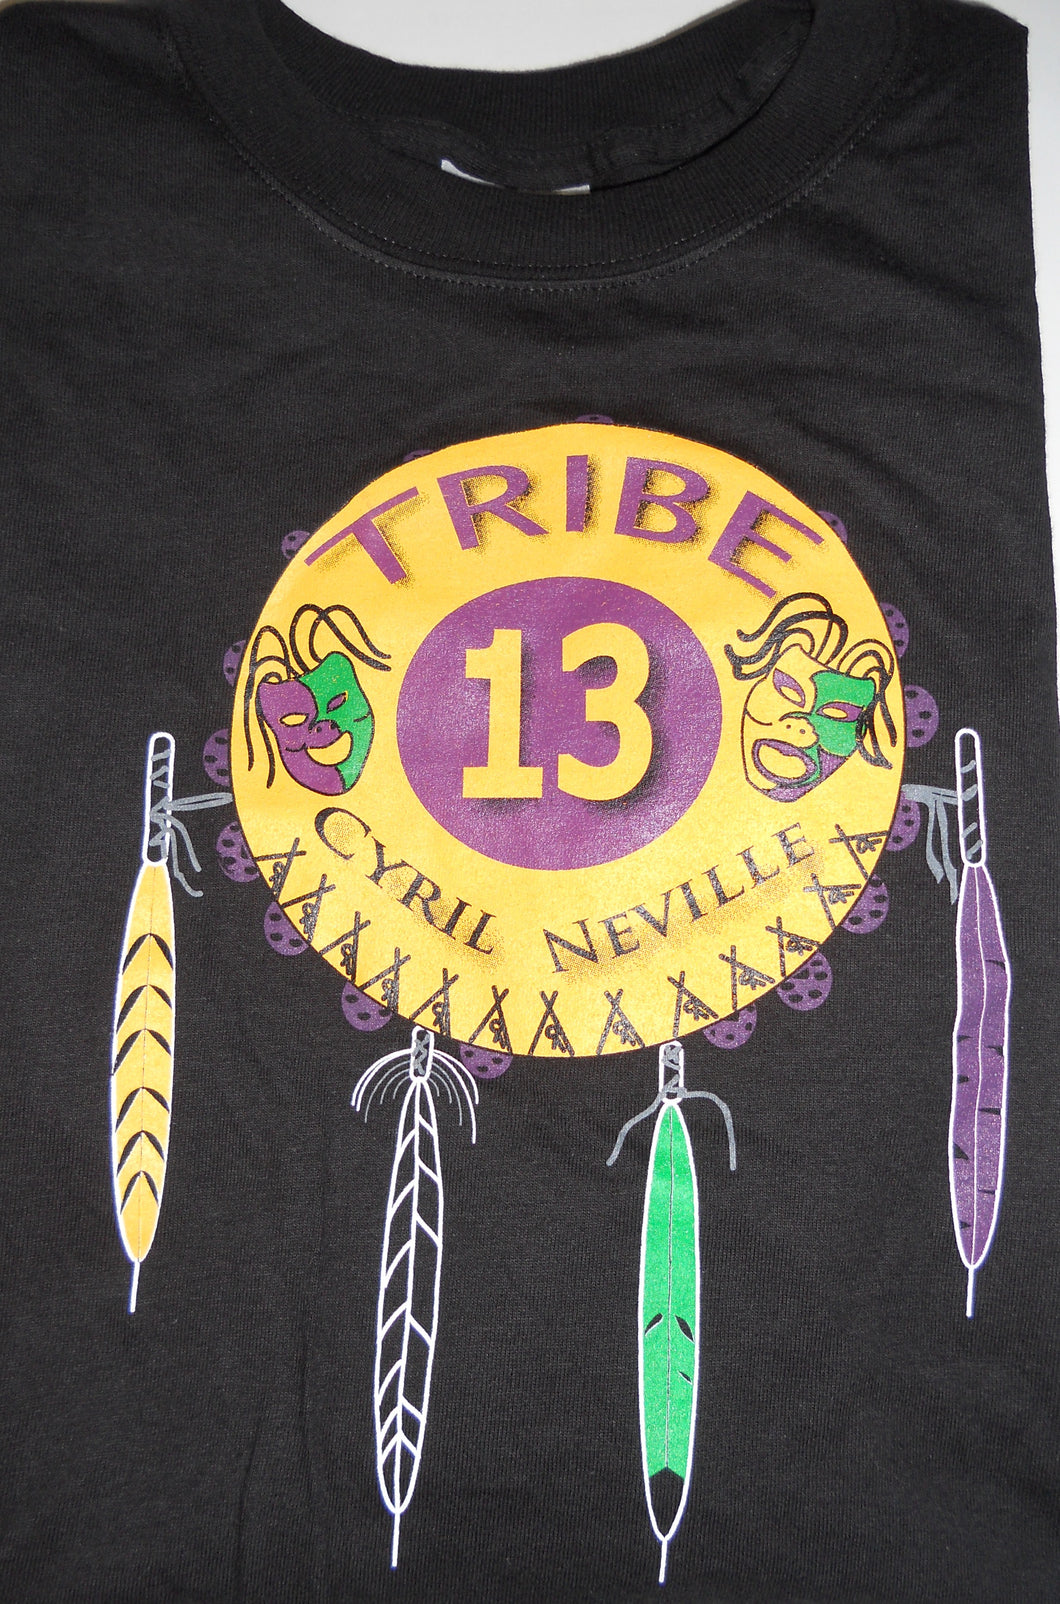 Cyril Neville Tribe 13, Black, Medium - T-shirt